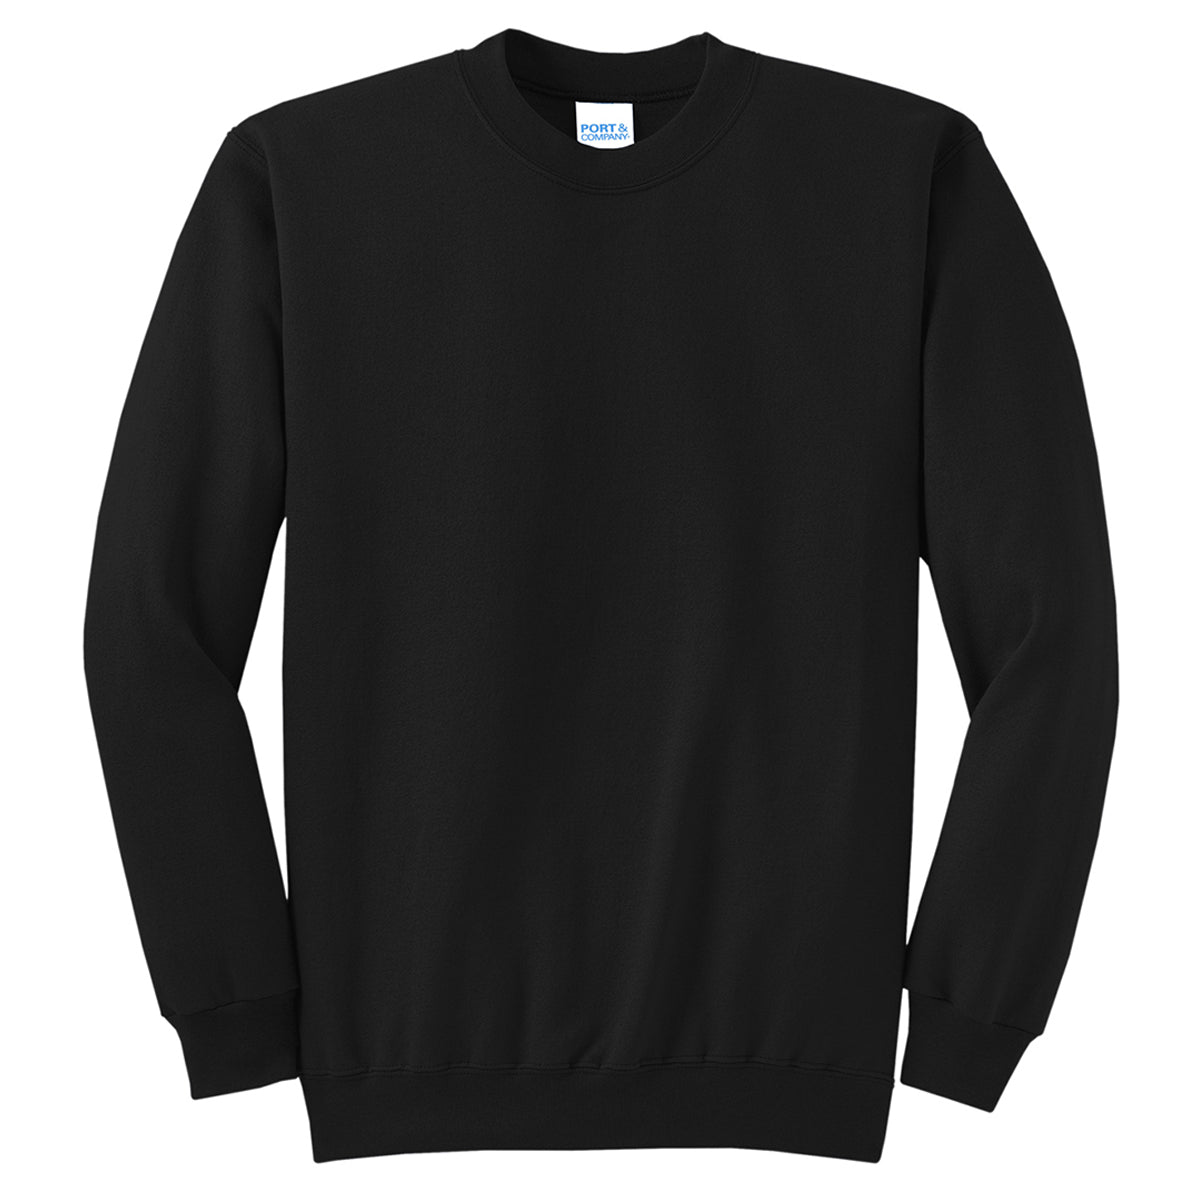 Windsor - Lady Knights Softball Seams - Black (Tee/DriFit/Hoodie/Sweatshirt) - Southern Grace Creations